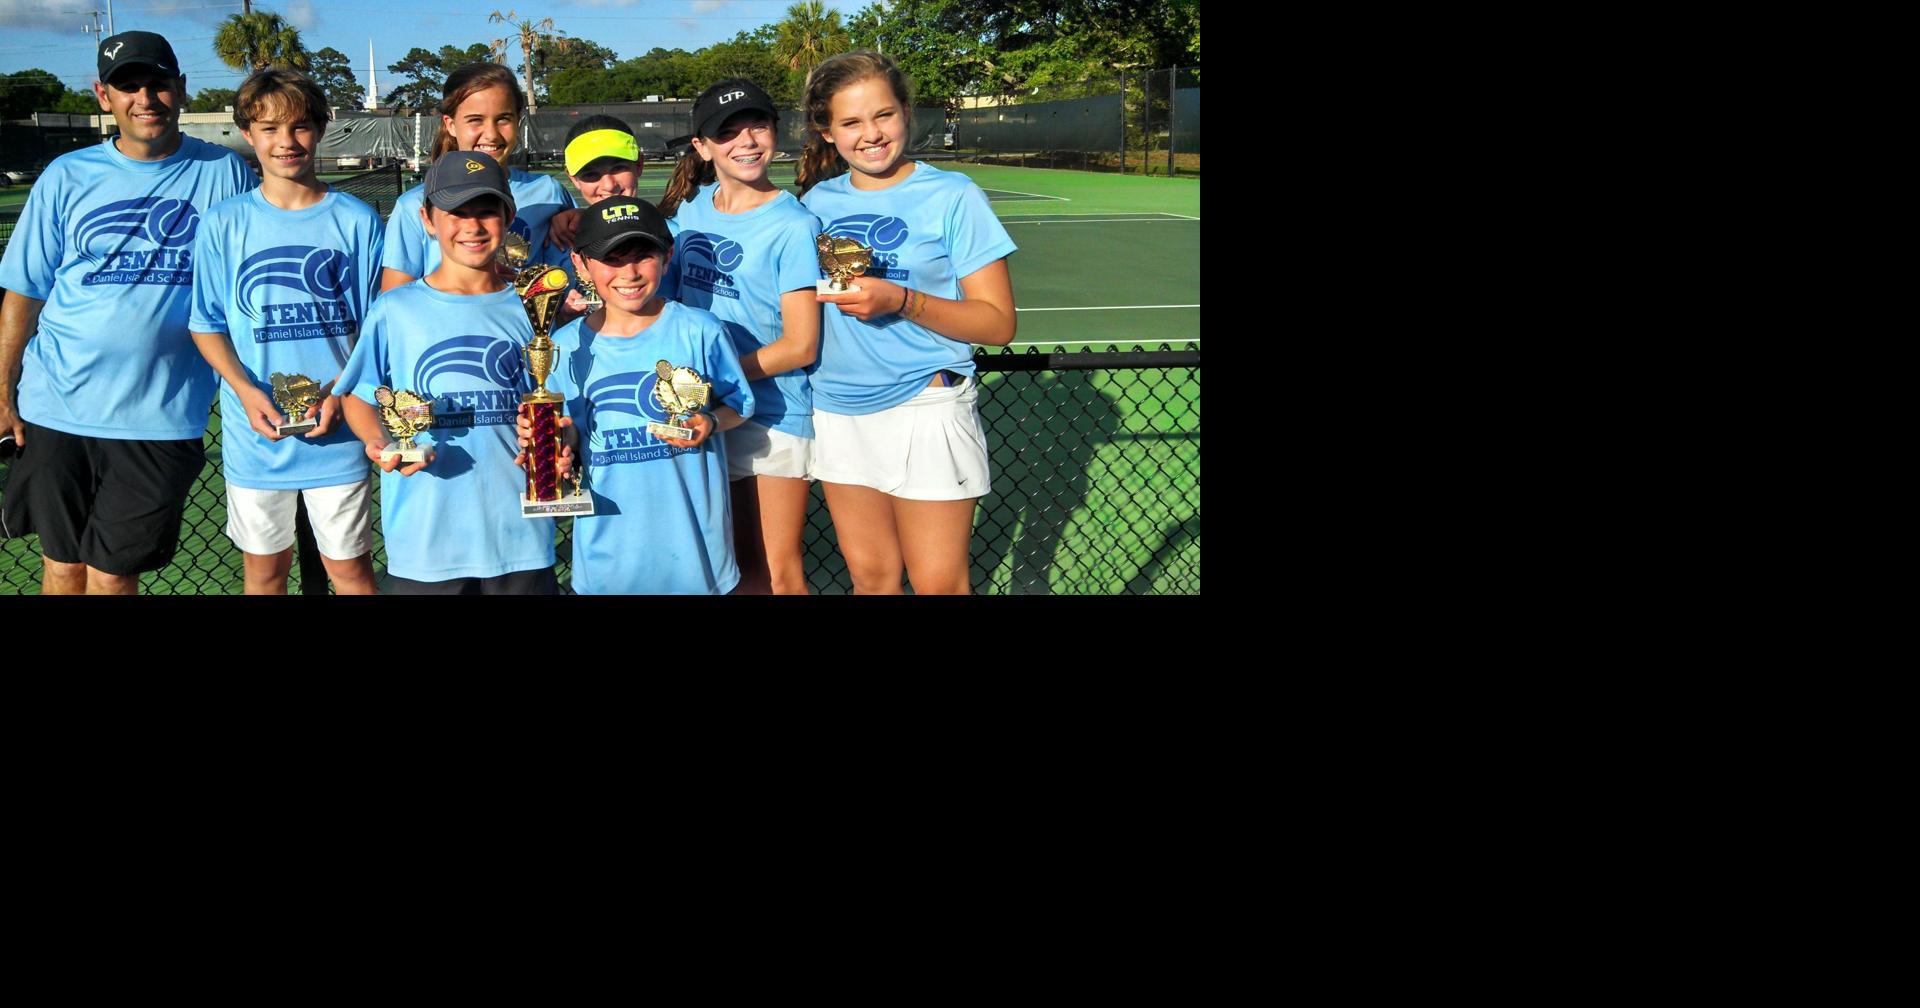 Daniel Island School team wins tricounty tennis title Local and